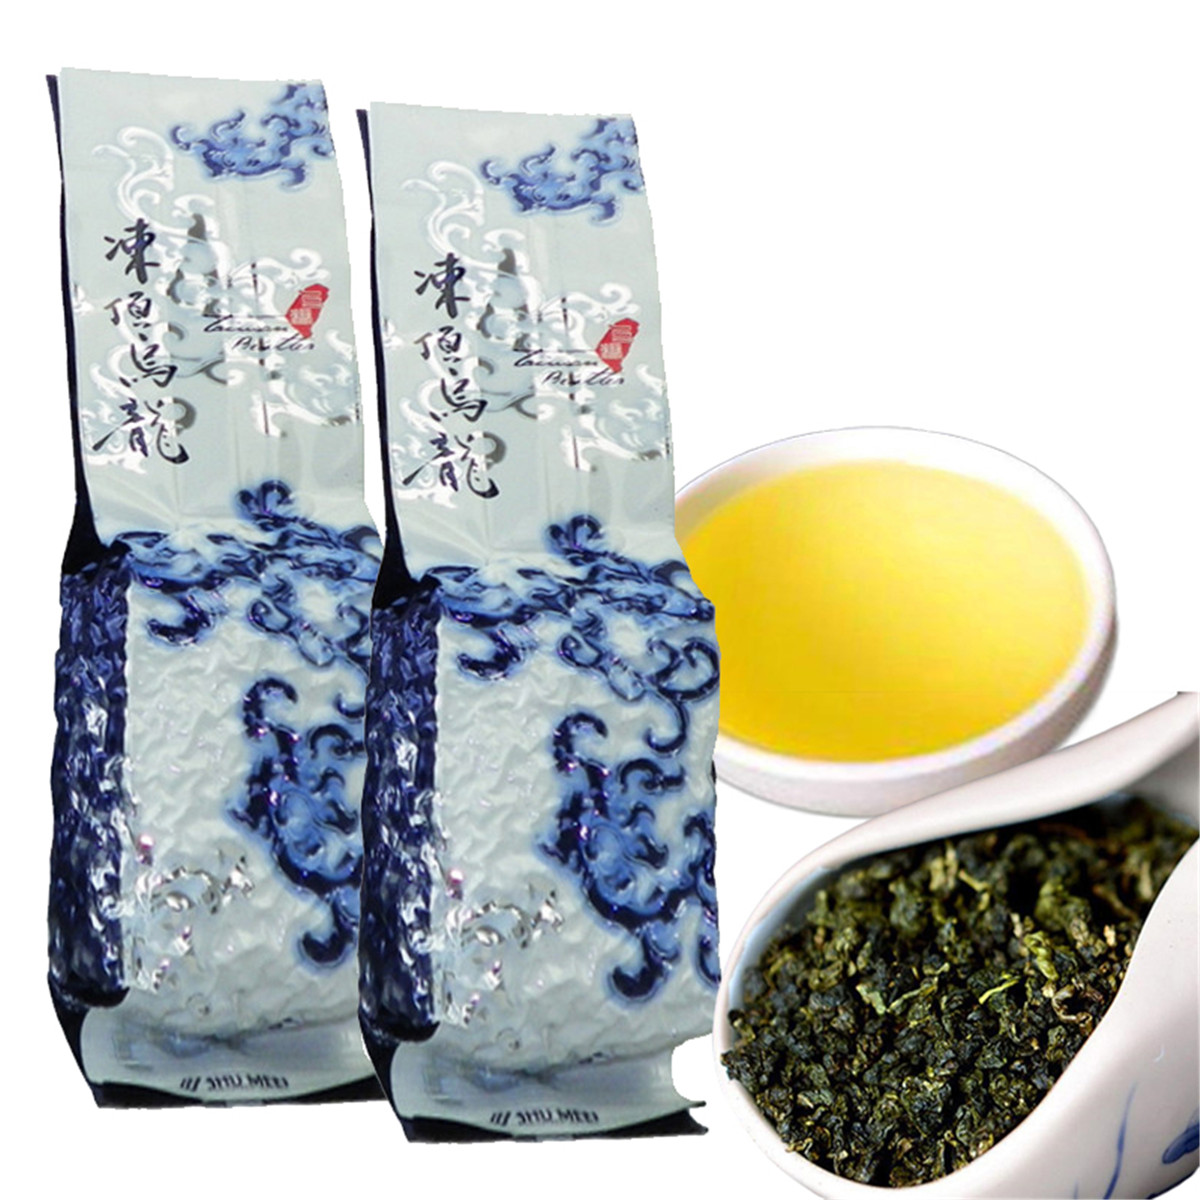 

Hot Sales 250g Chinese Organic Oolong Tea Featured Taiwan Beauty High Mountains Milk Oolong Green Tea Health Care New Spring Tea Green Food